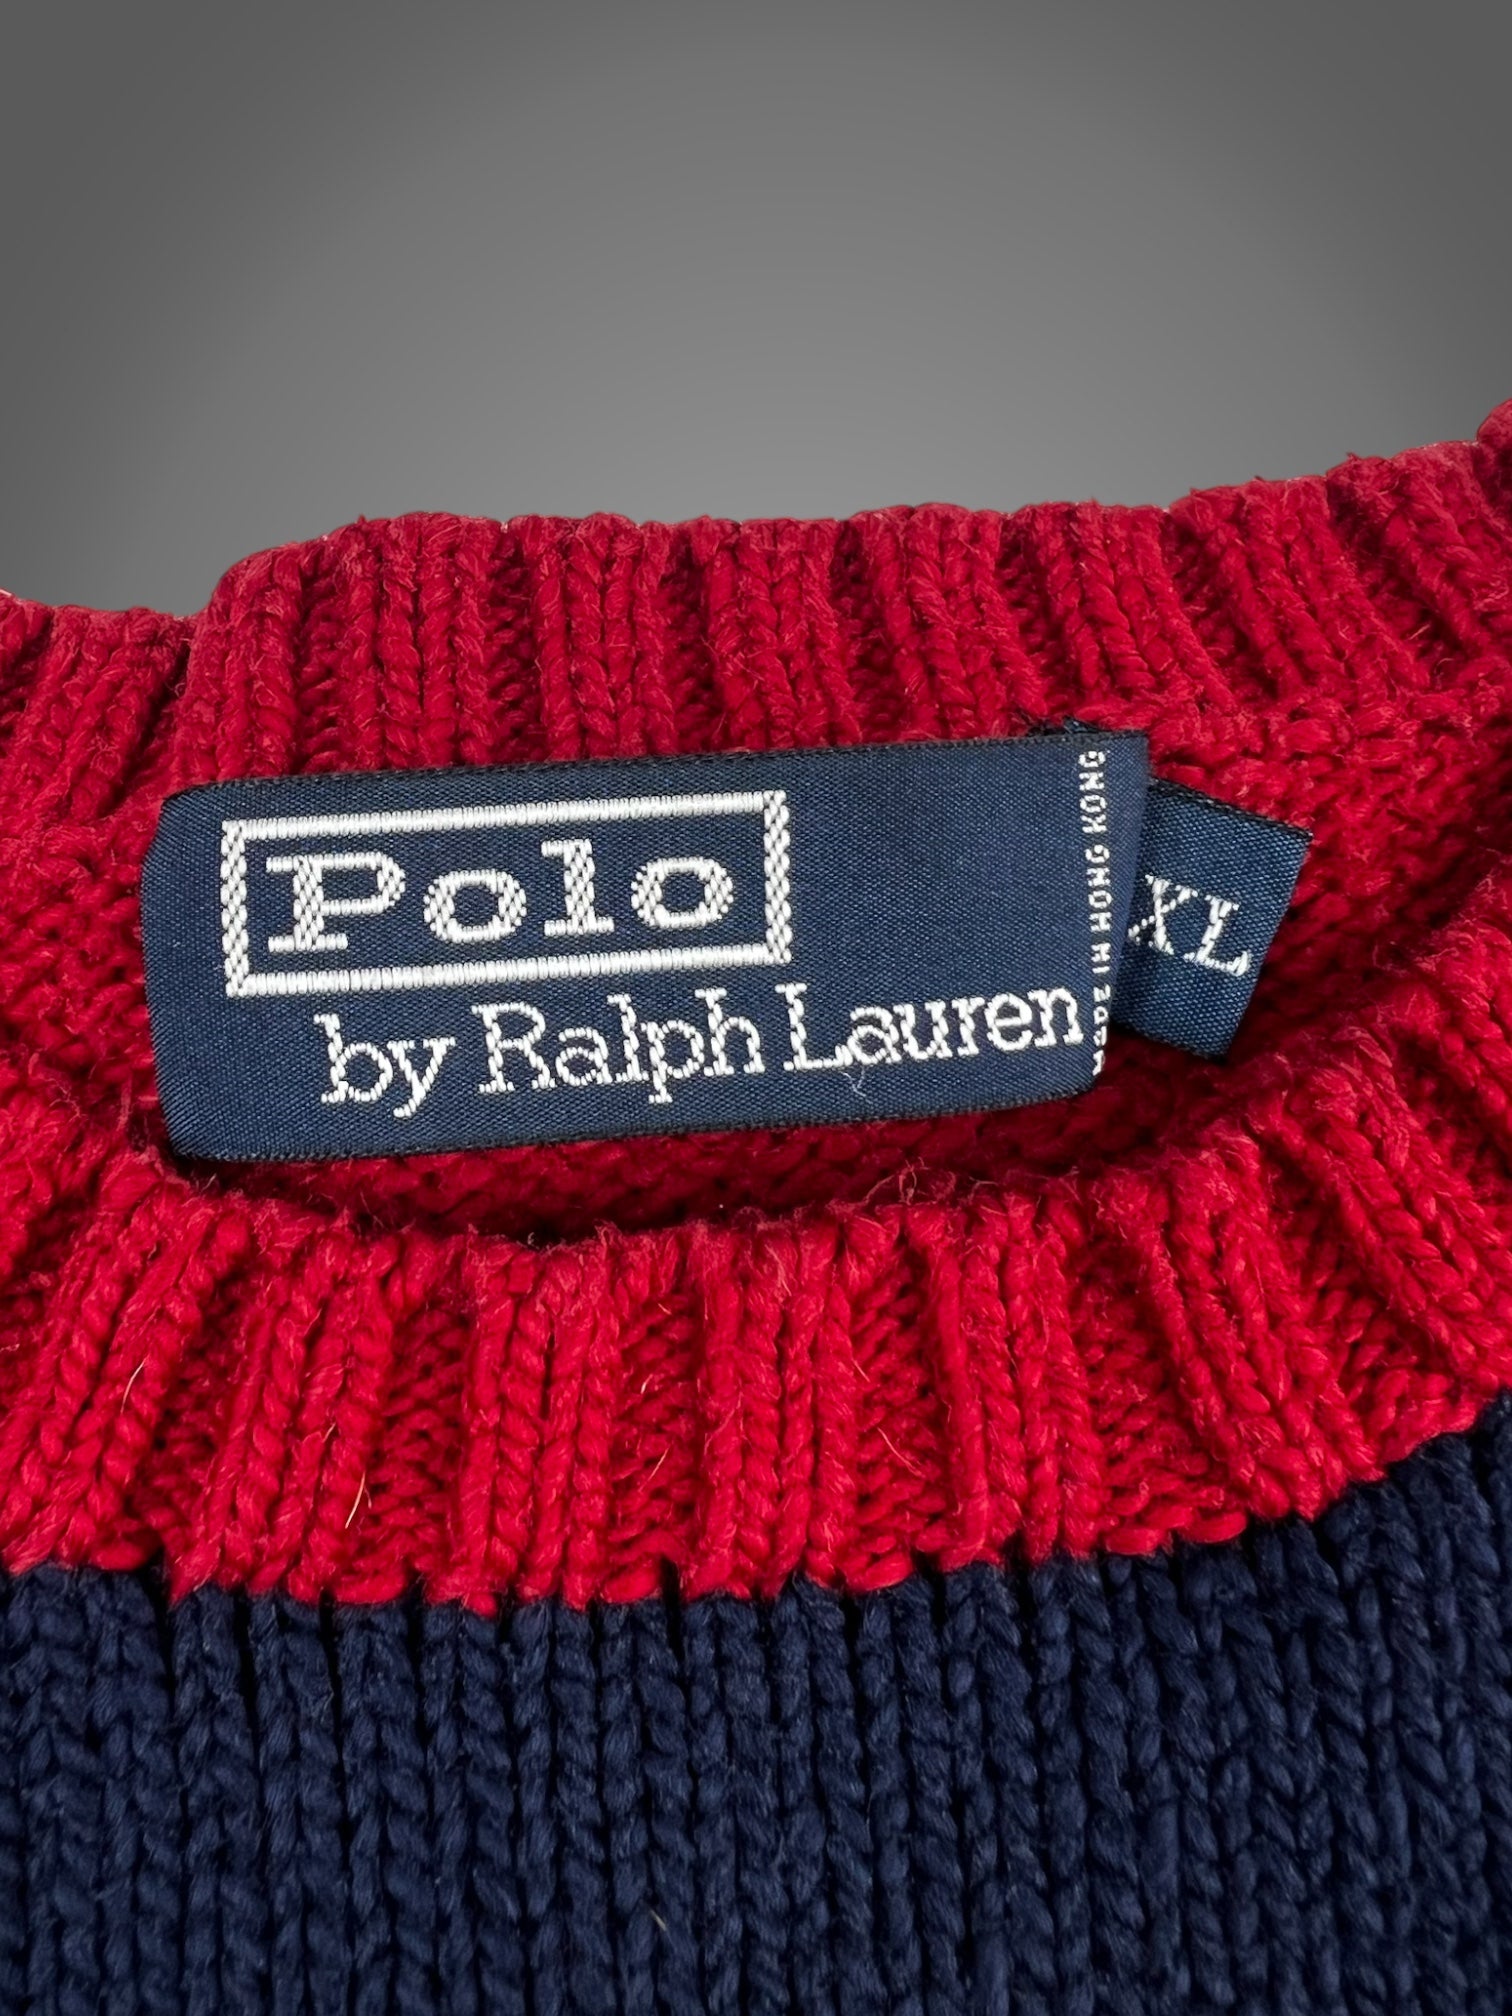 90s Polo Ralph Lauren cotton striped sweater fits L